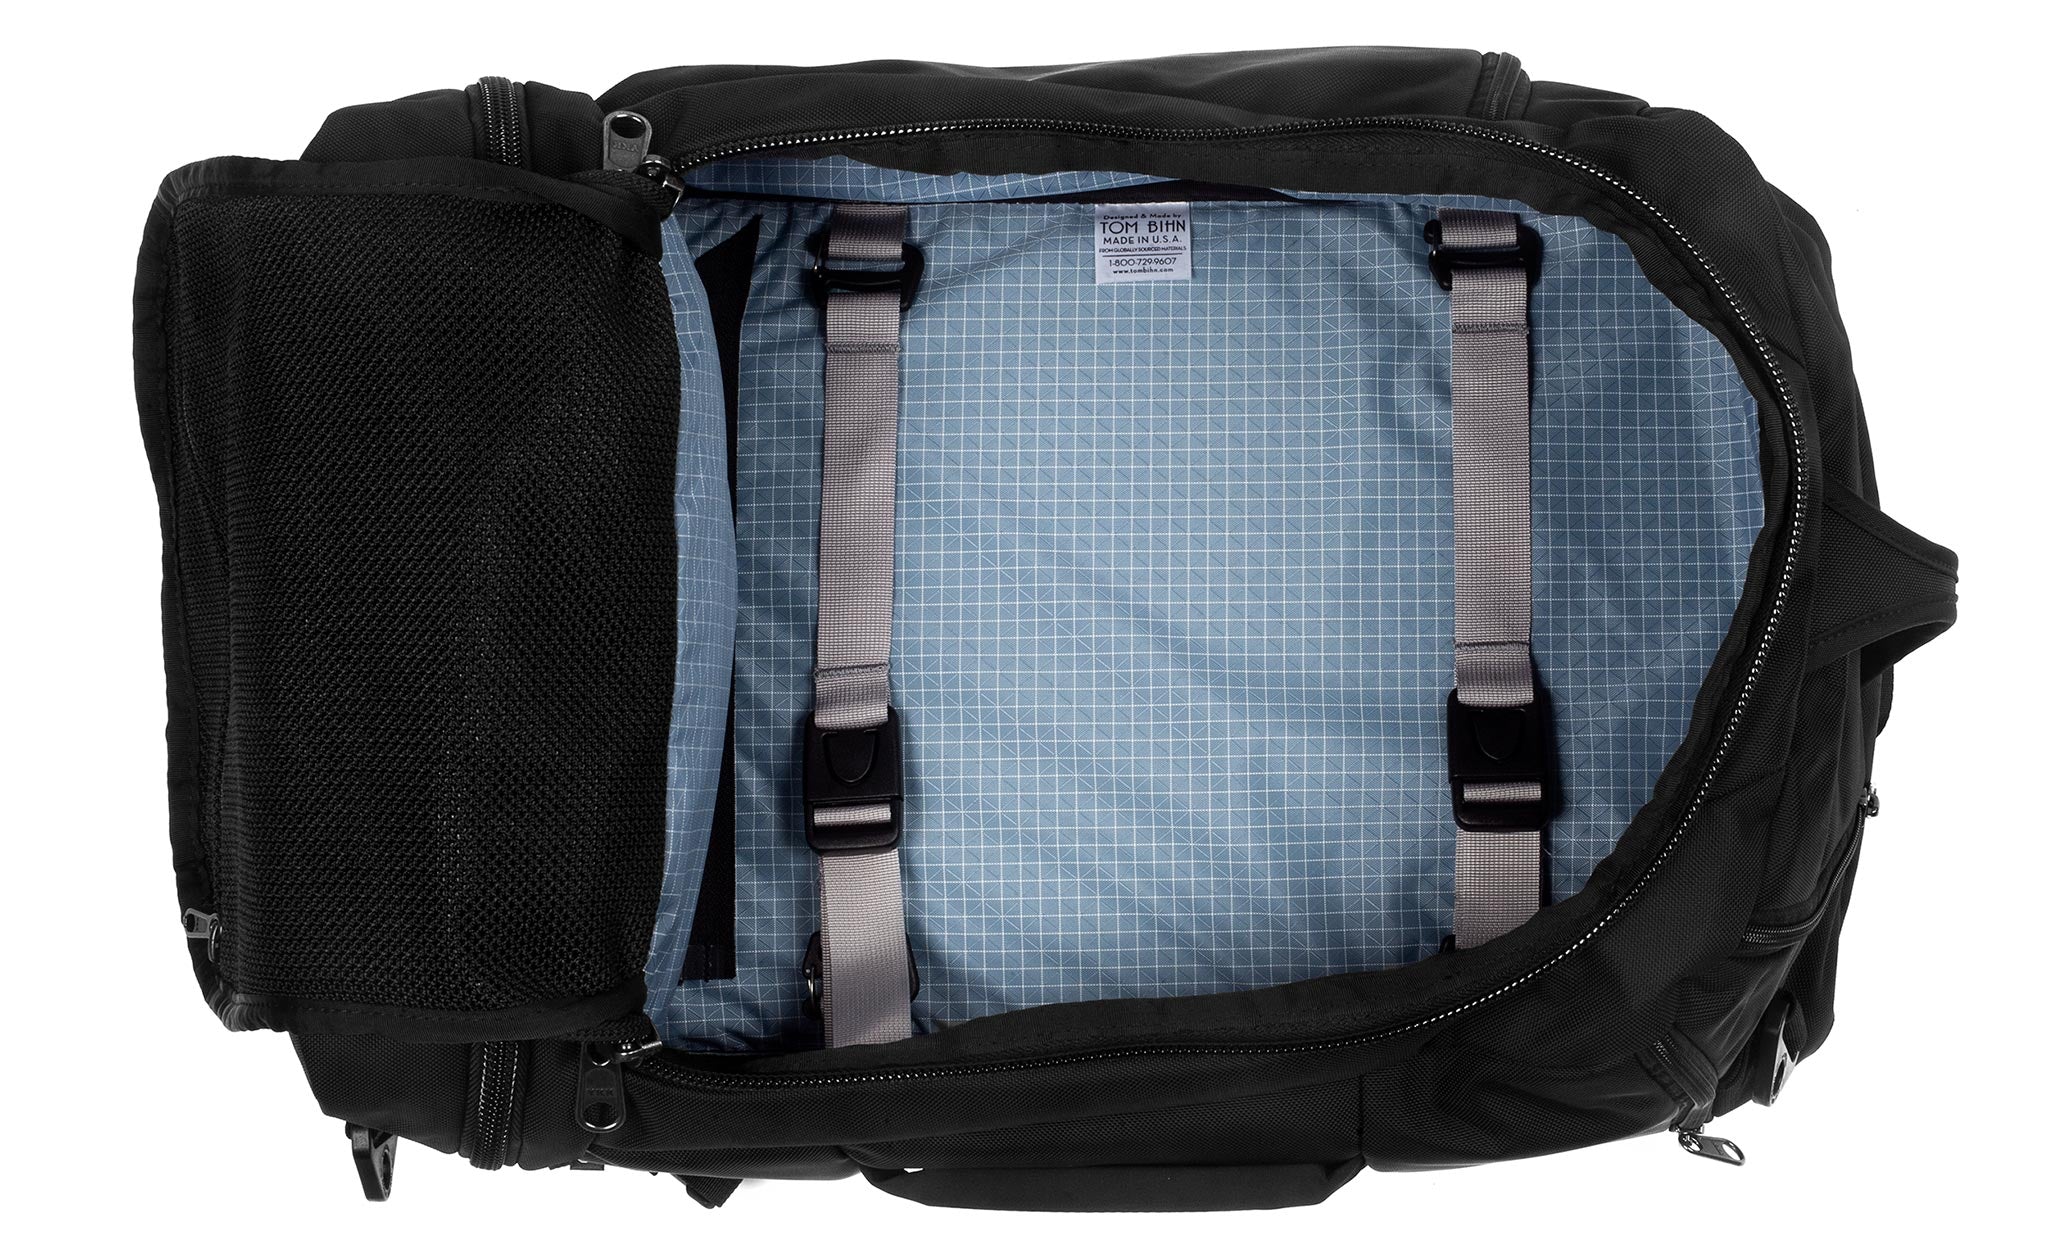 TOM BIHN Techonaut 45, Convertible Travel Backpack, 45L